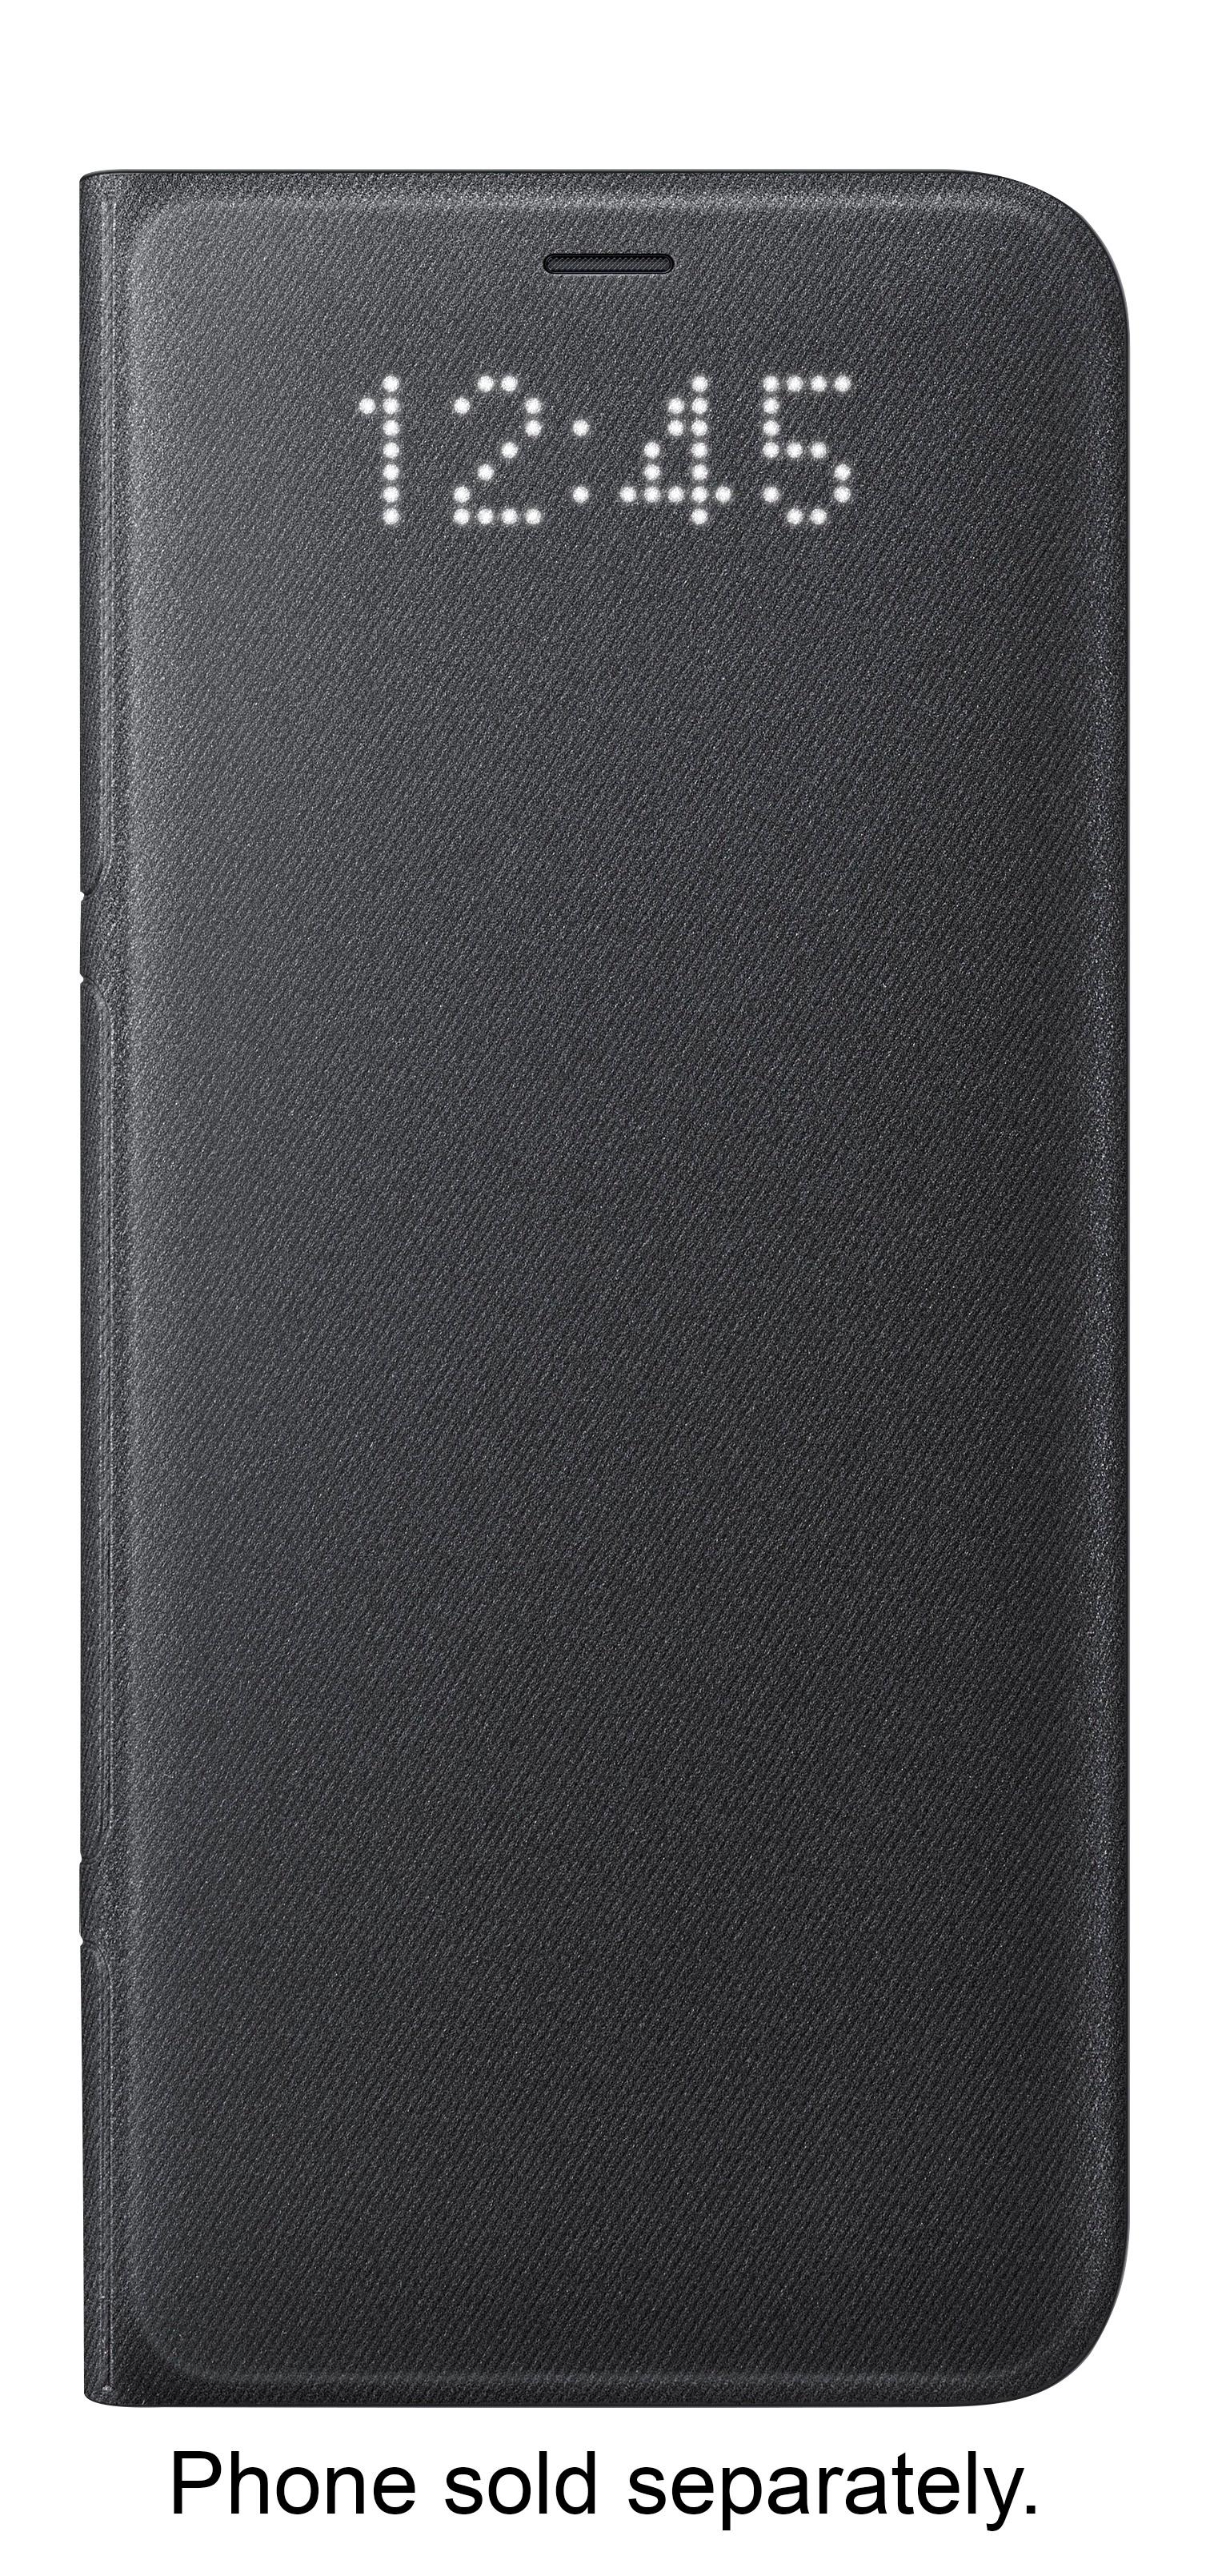 penge parade Jane Austen Best Buy: LED Wallet Cover for Samsung Galaxy S8 Black EF-NG950PBEGUS